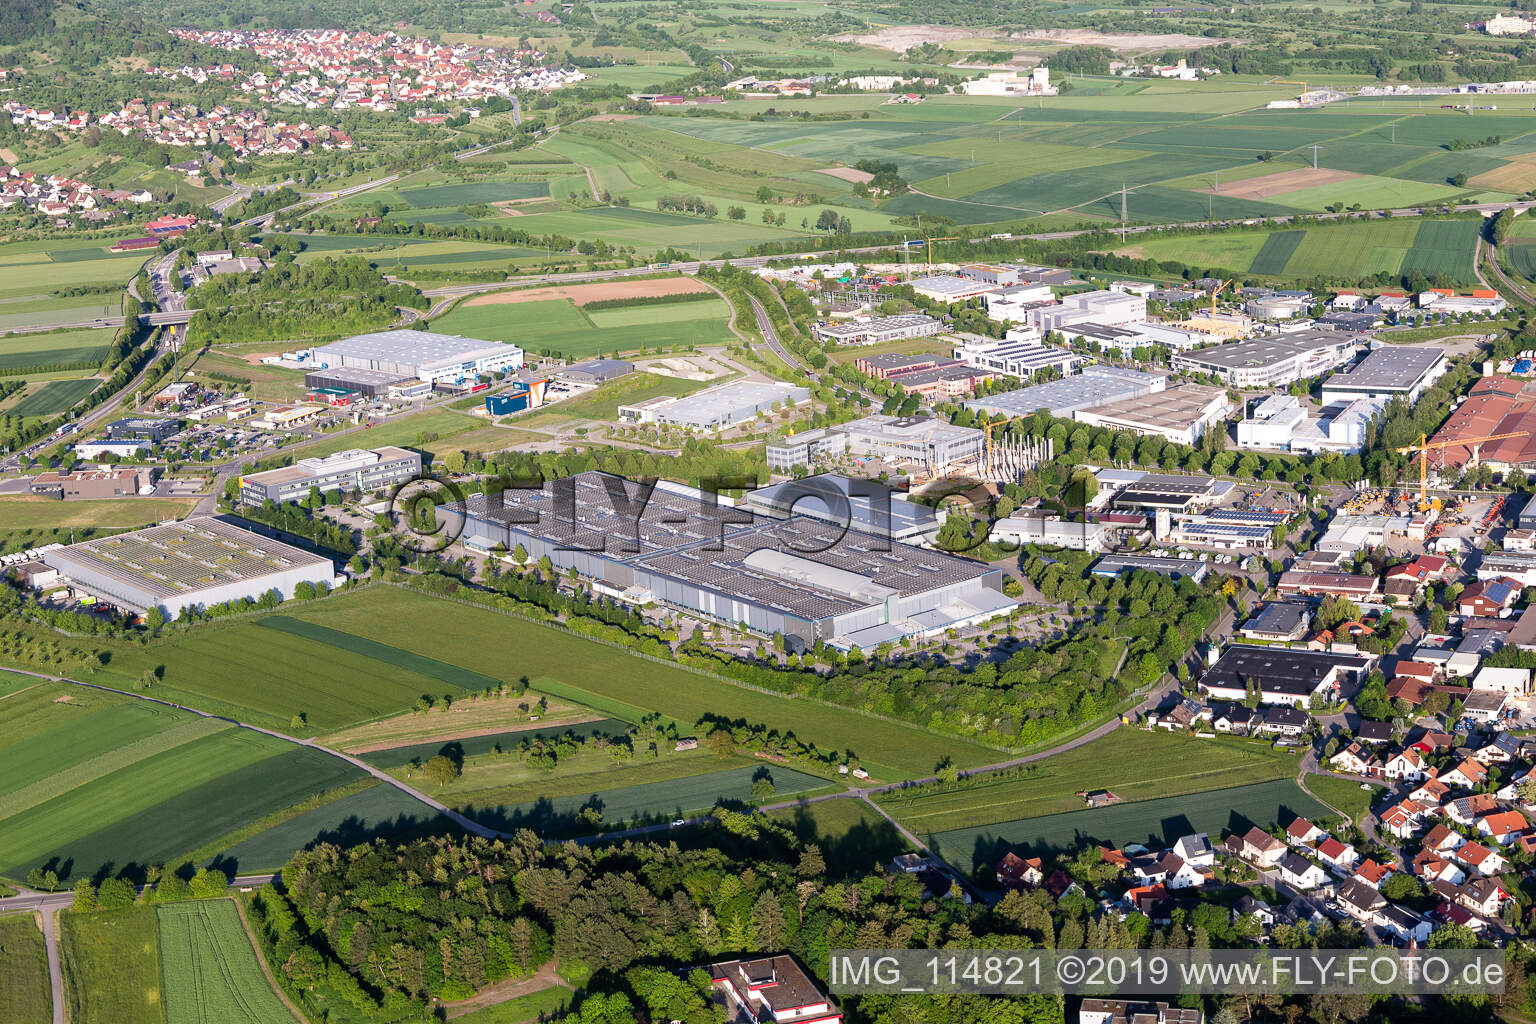 Industriegebiet: LGI Logistics Group International, Phoenix Contact in Herrenberg im Bundesland Baden-Württemberg, Deutschland